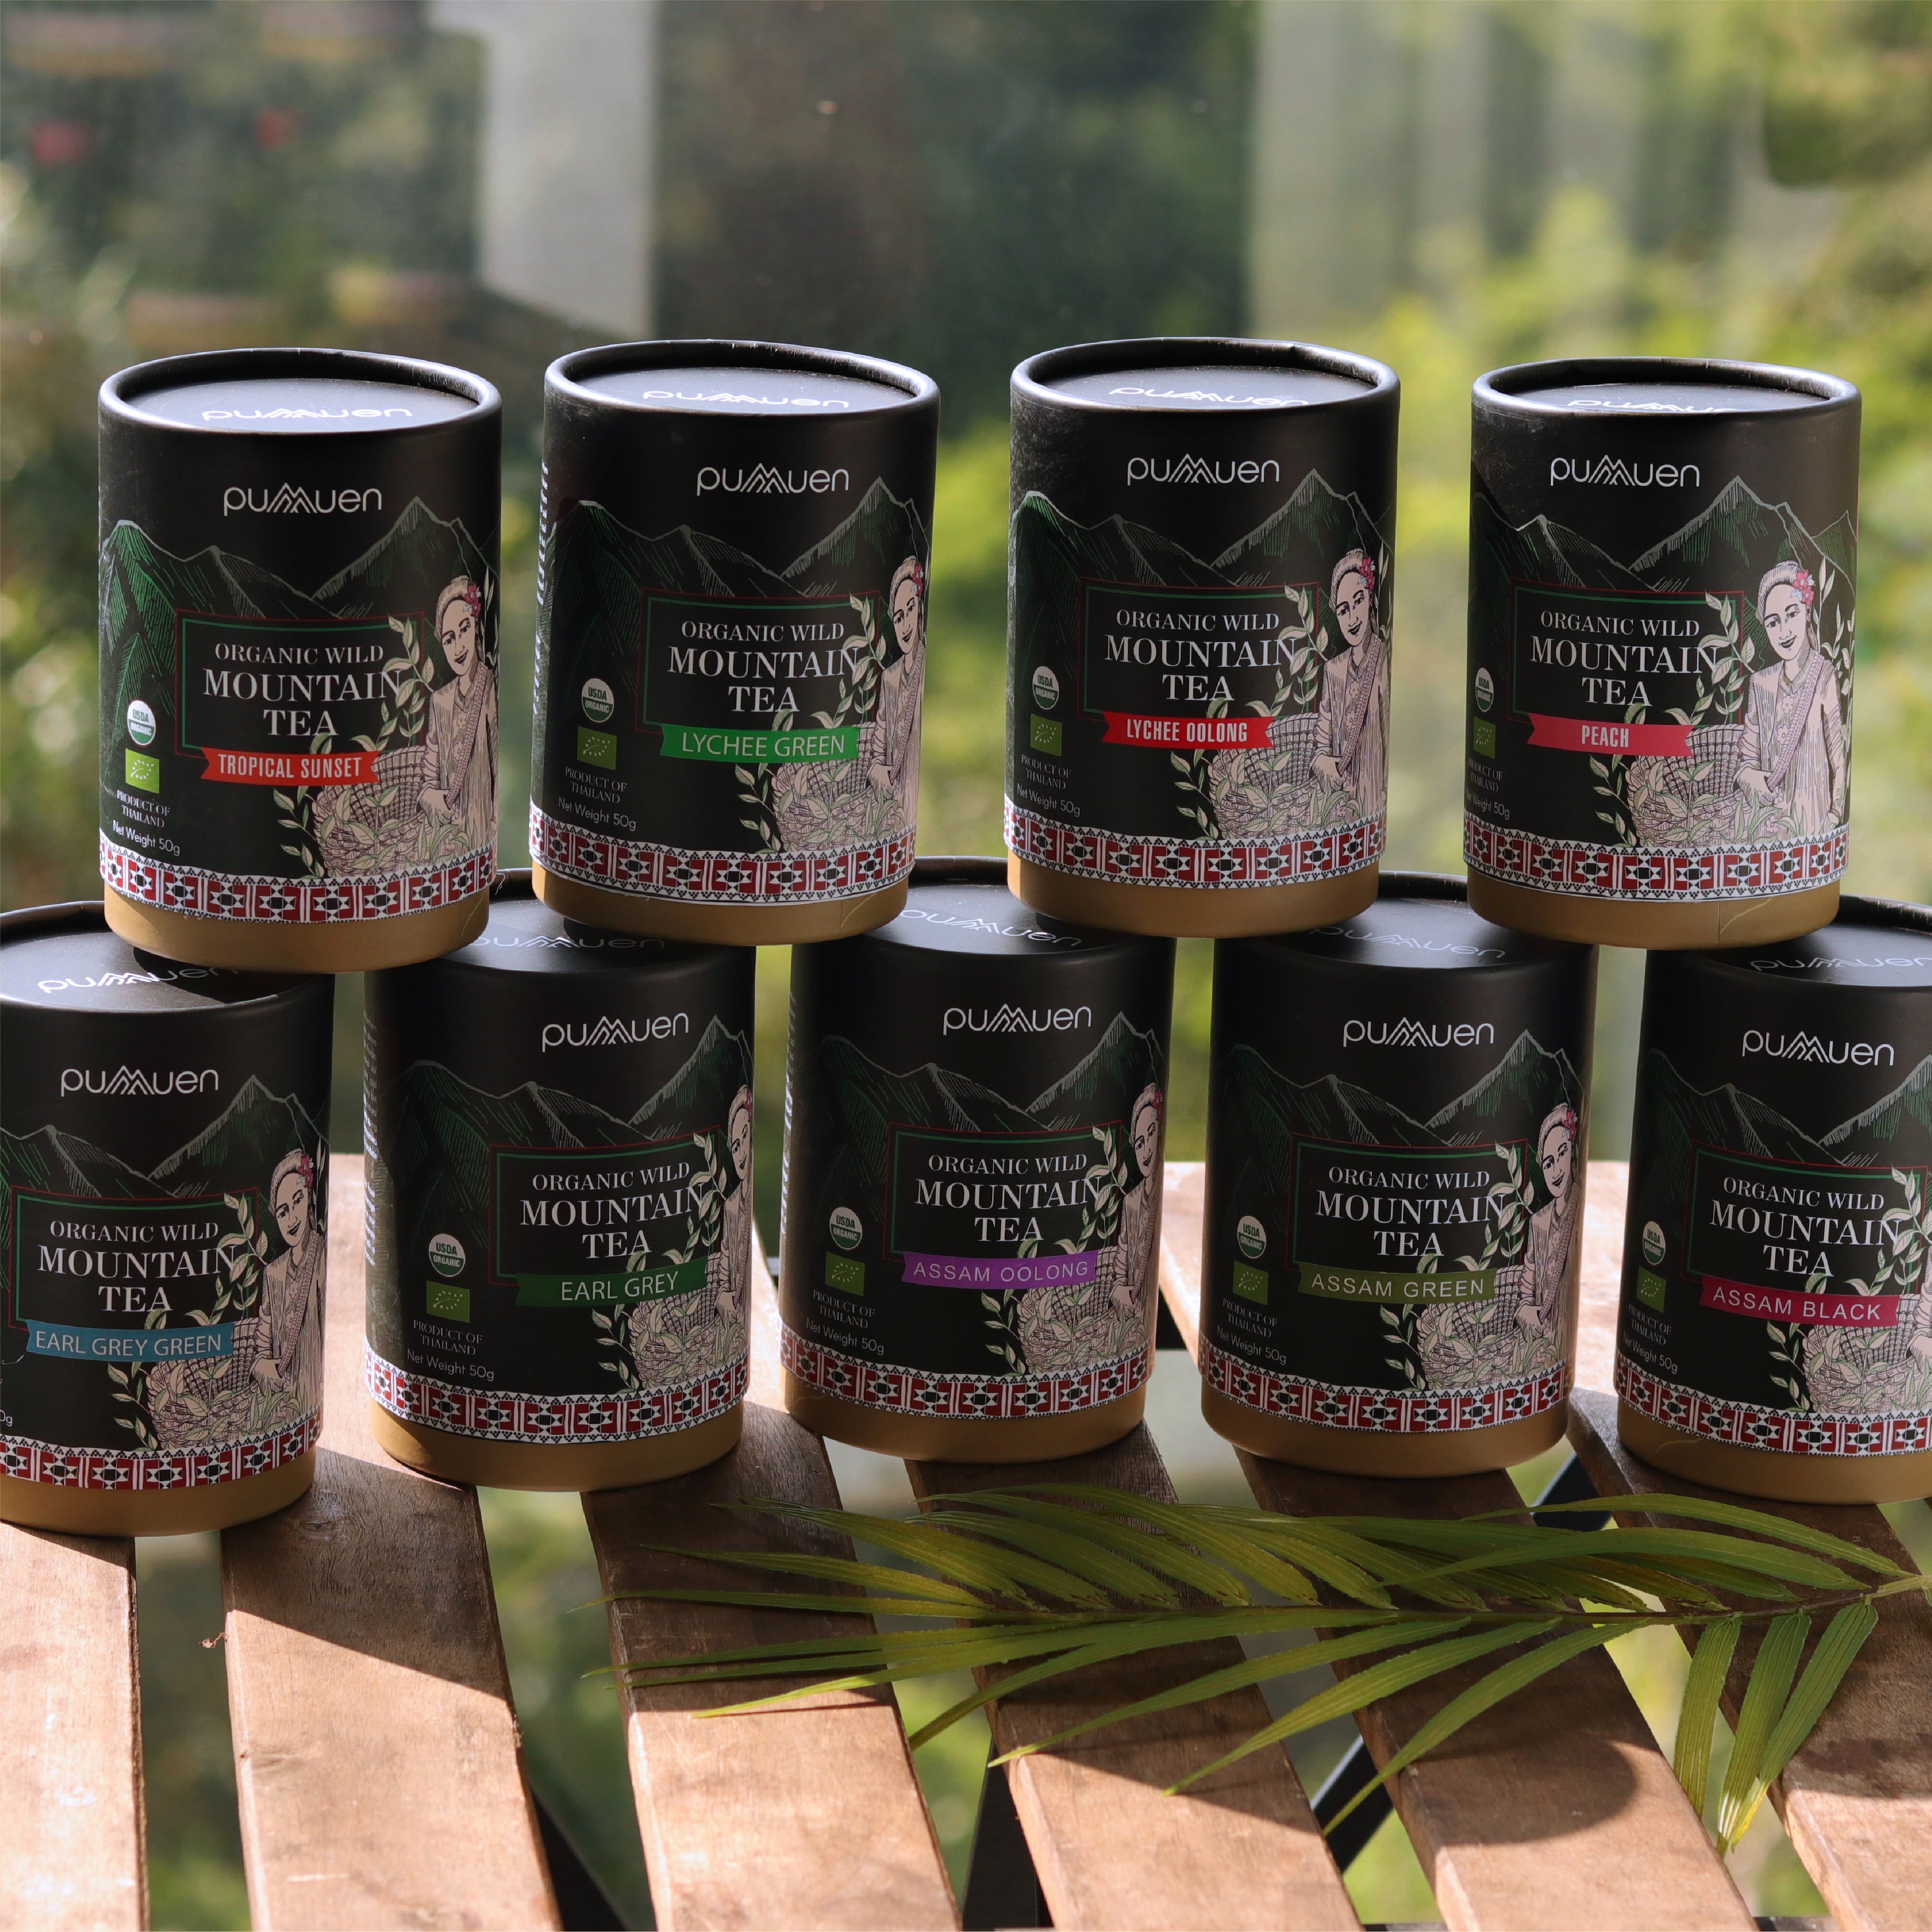 Pumuen organic wild grow mountain tea - Assam Black